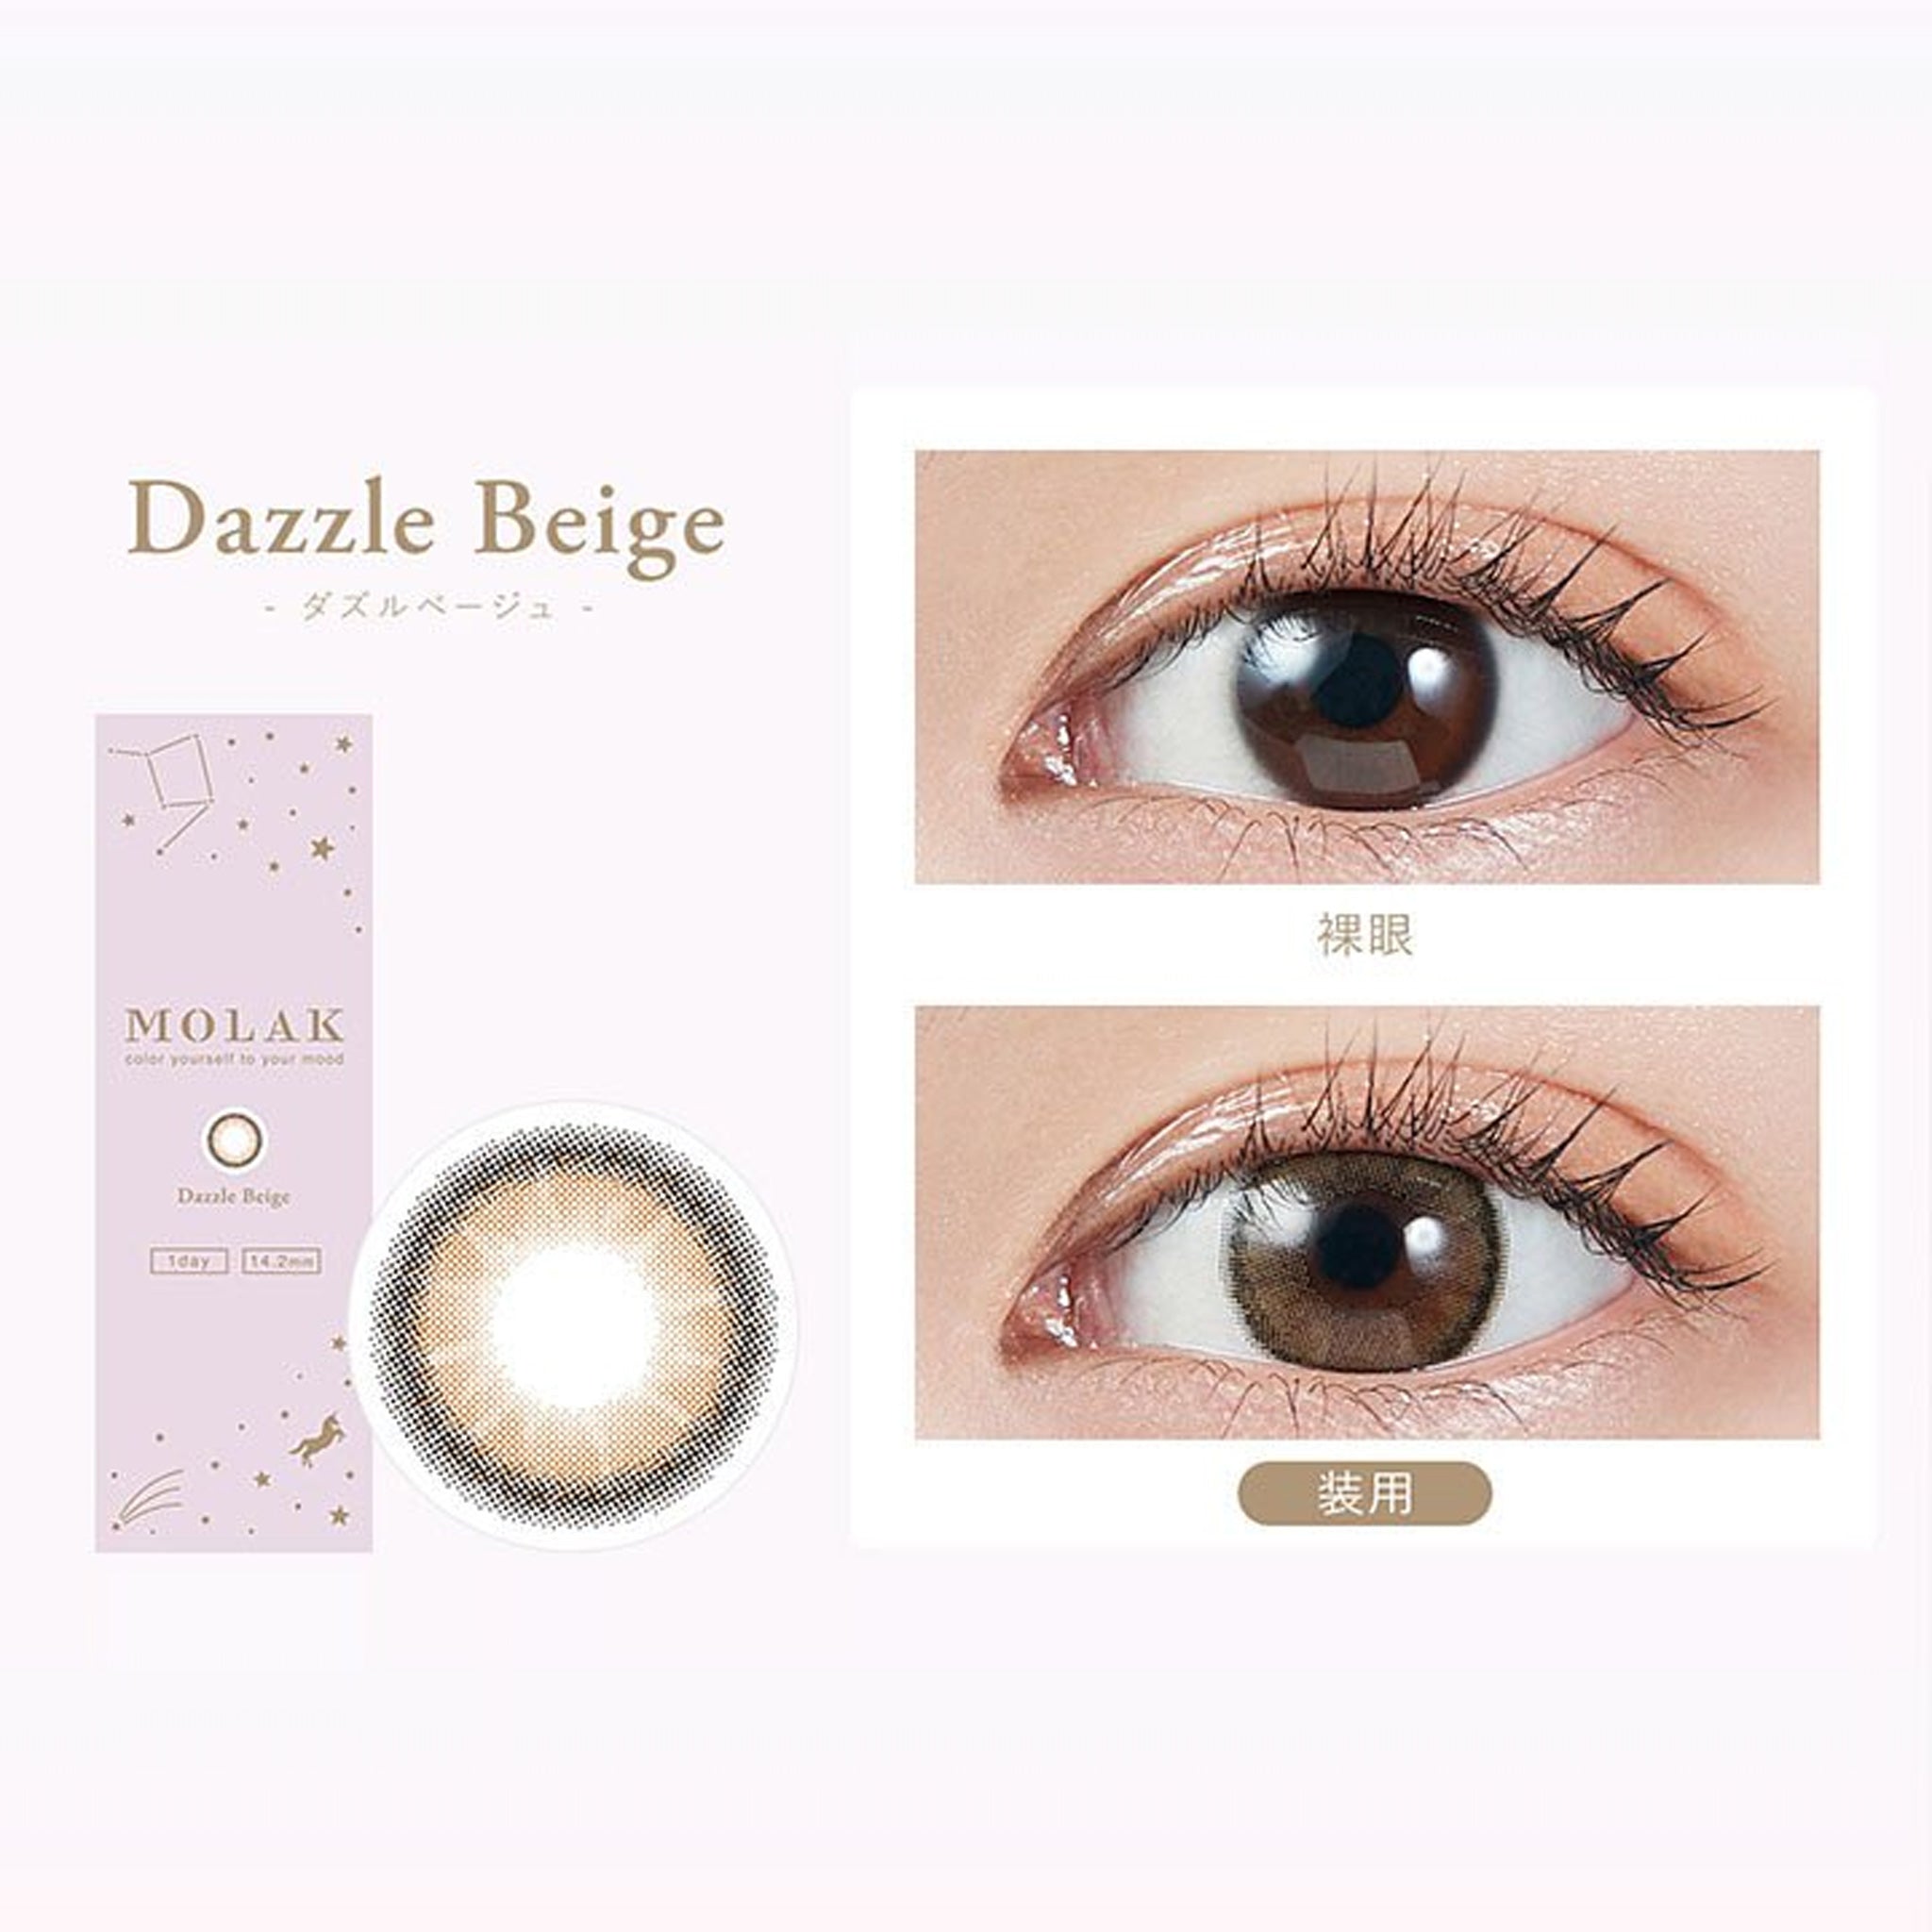 MOLAK Daily Contact Lenses-Dazzle Beige 10lenses